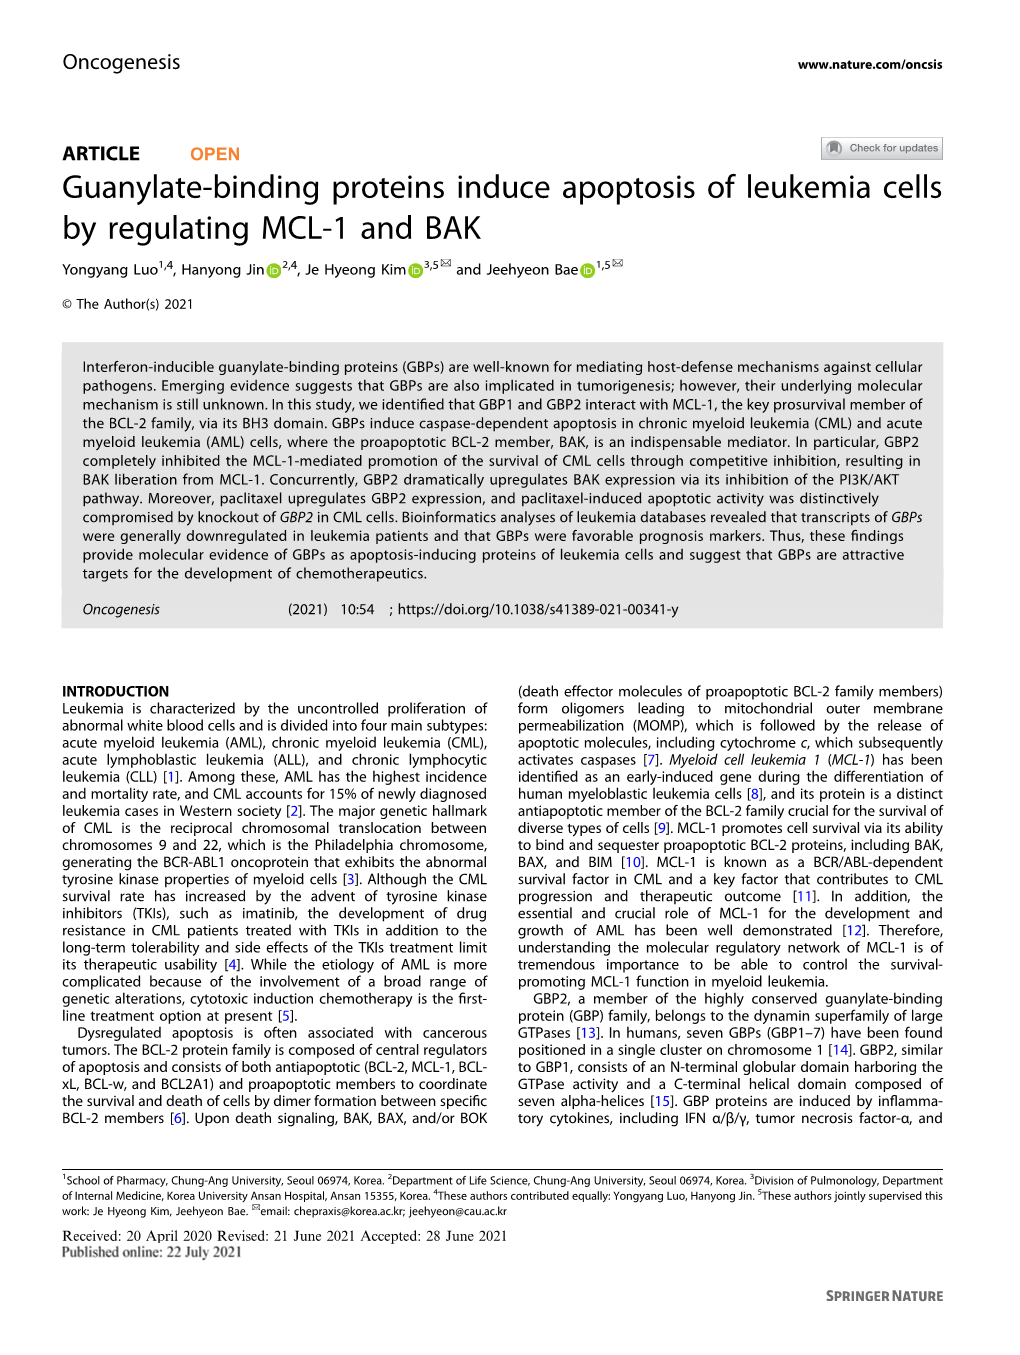 Guanylate-Binding Proteins Induce Apoptosis of Leukemia Cells by Regulating MCL-1 and BAK ✉ ✉ Yongyang Luo1,4, Hanyong Jin 2,4, Je Hyeong Kim 3,5 and Jeehyeon Bae 1,5